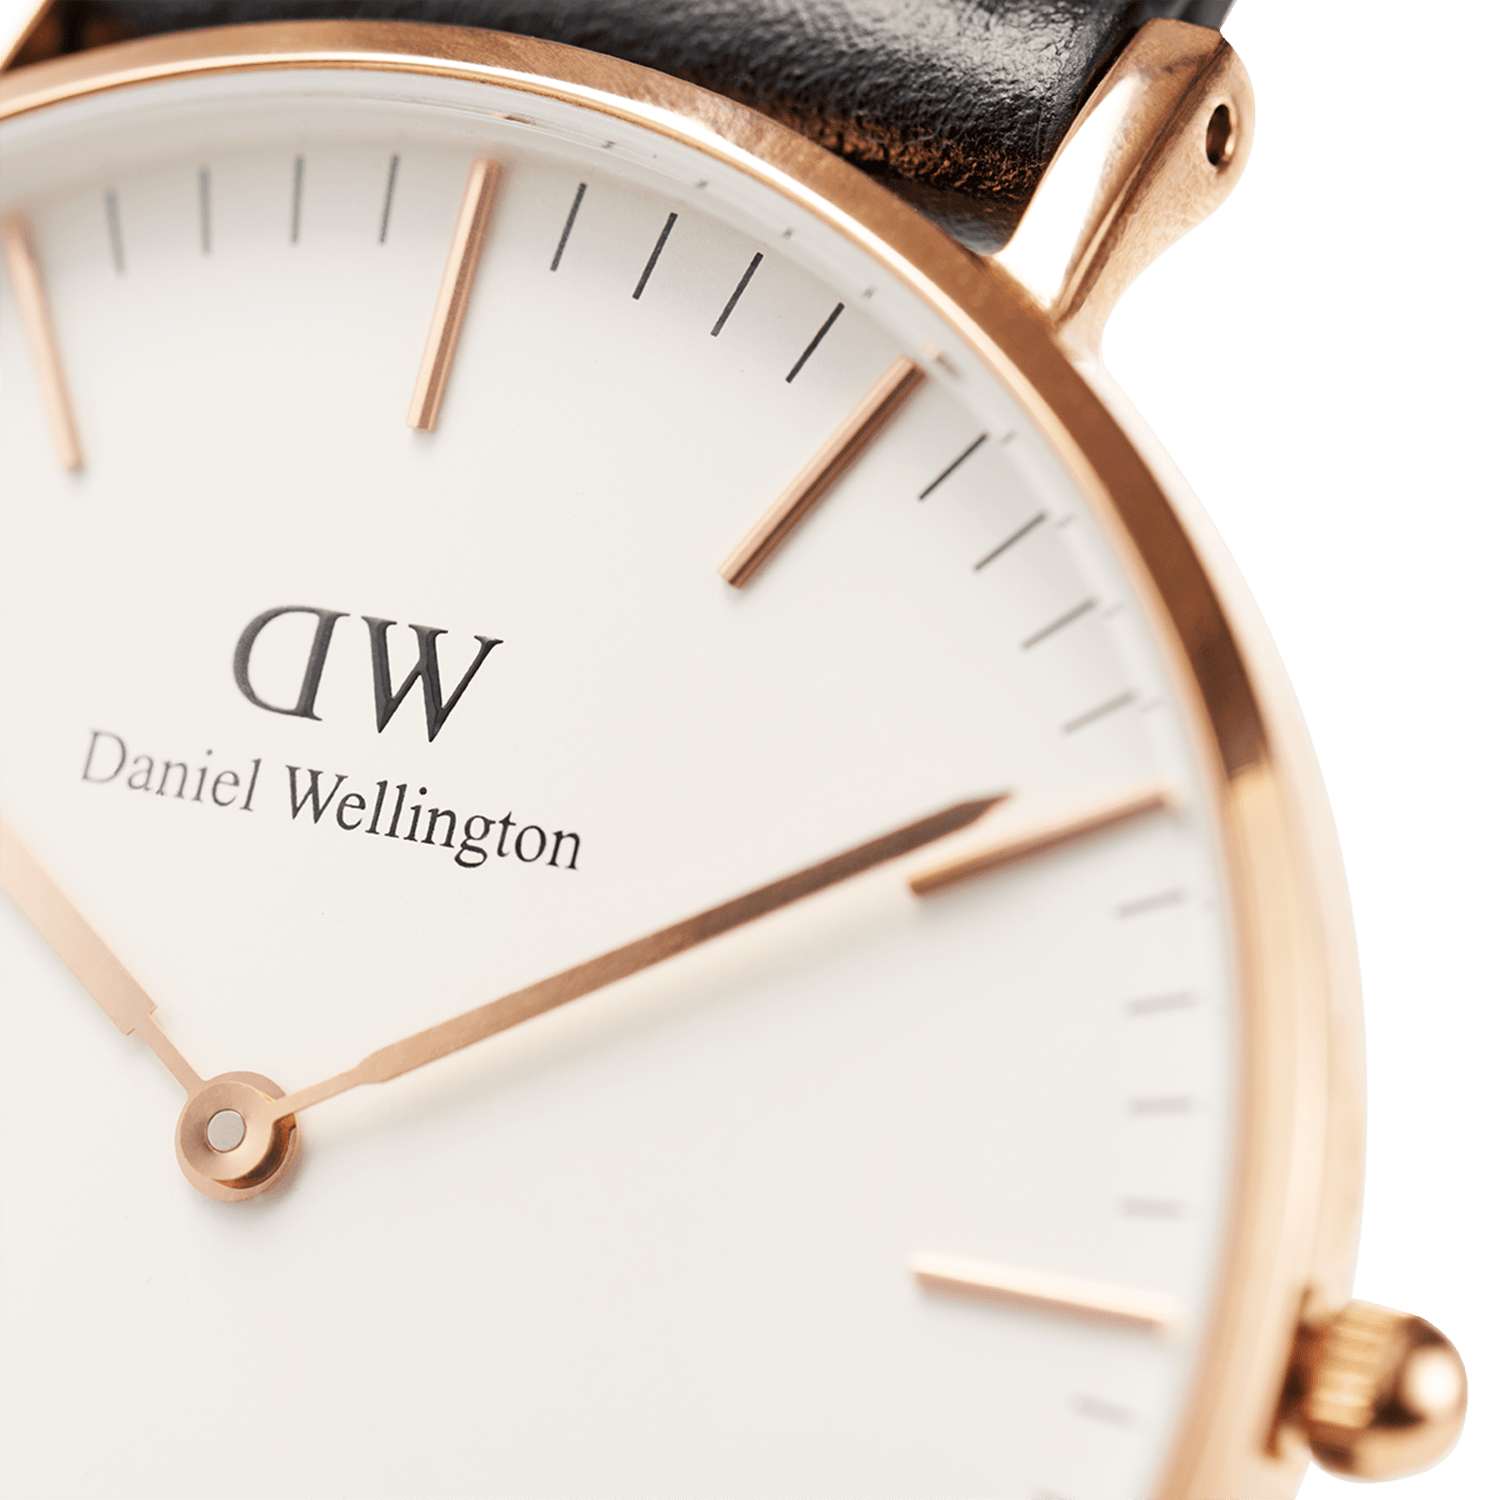 Classic Winchester – Daniel Wellington